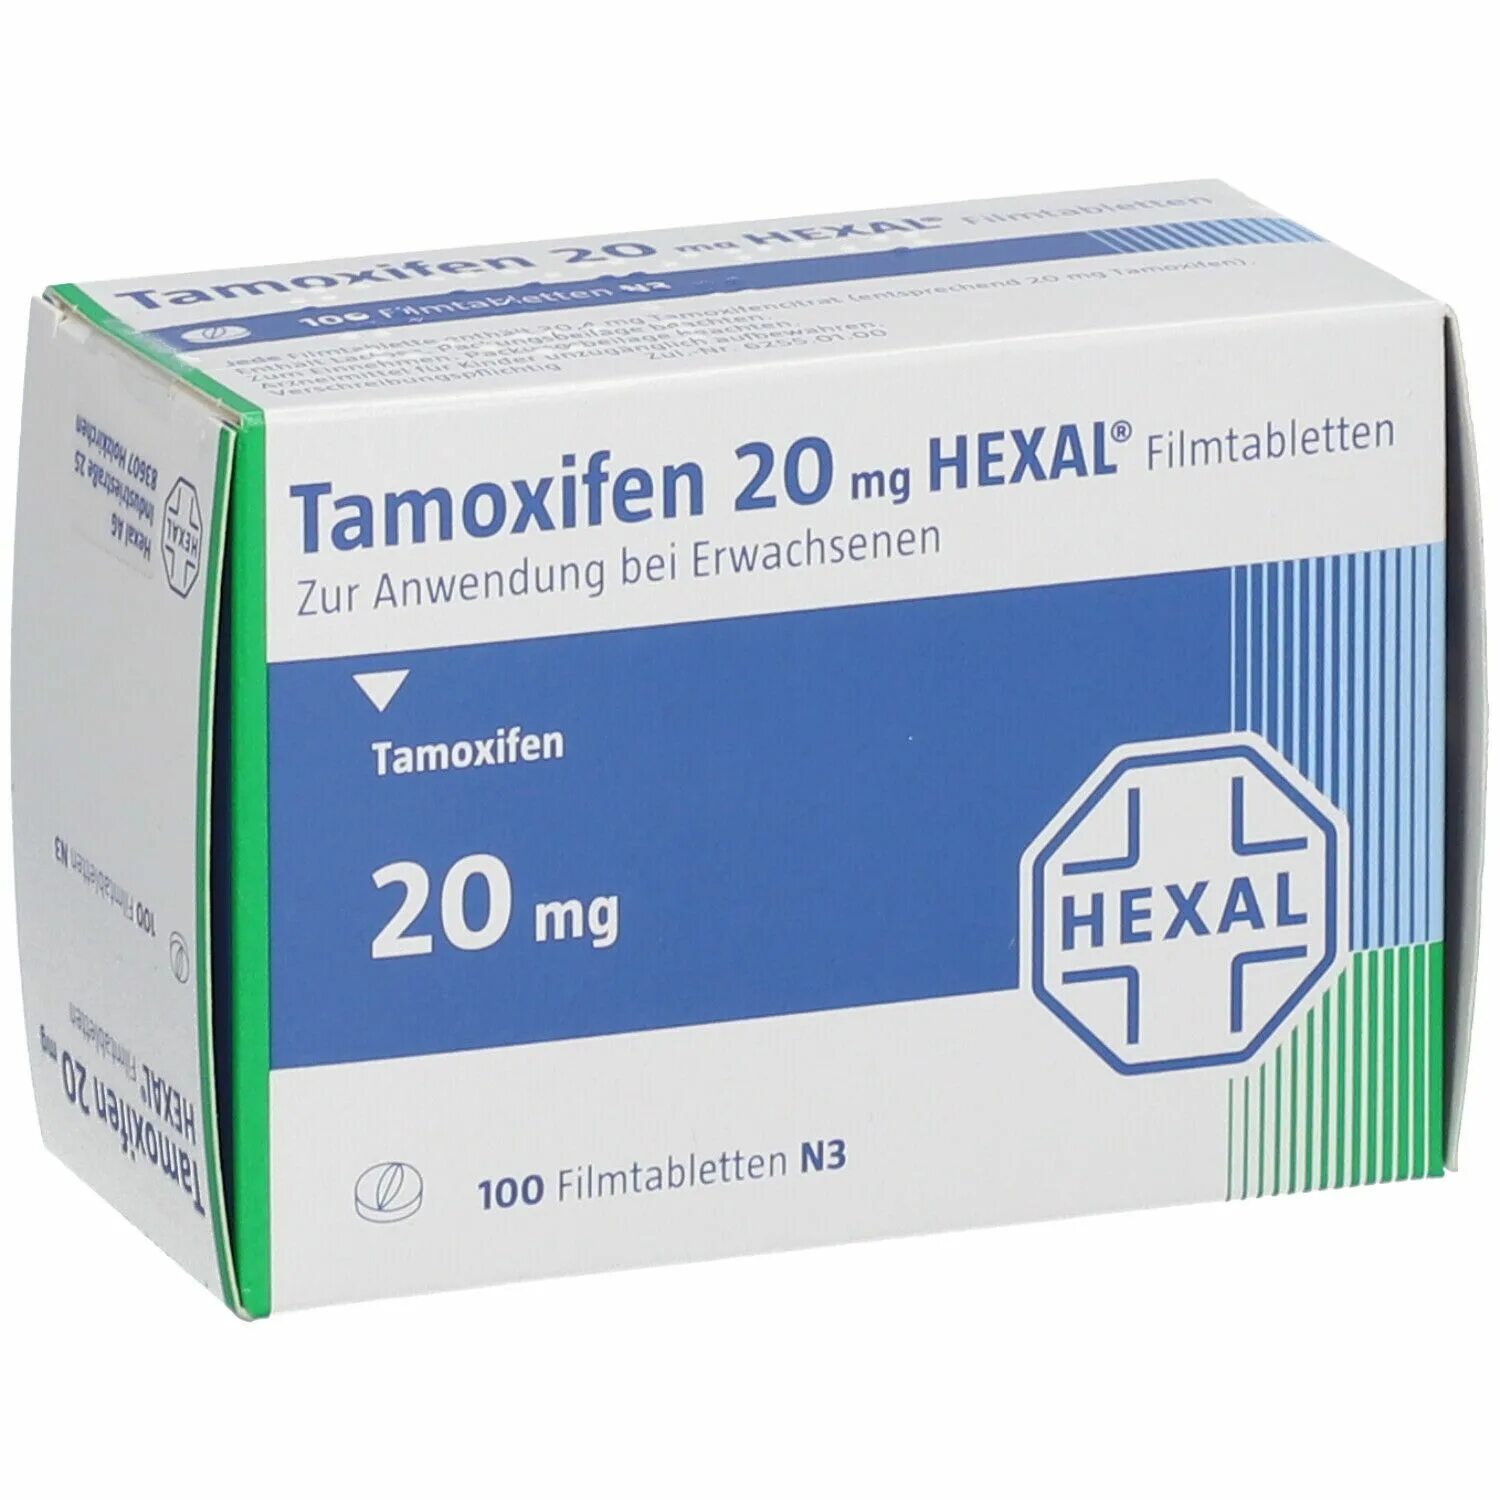 Tamoxifen Hexal Финляндия 20мг. Тамоксифен таблетки 20мг 30шт. Tamoxifen Hexal Германия 20мг. Тамоксифен 20 мг Финляндия.